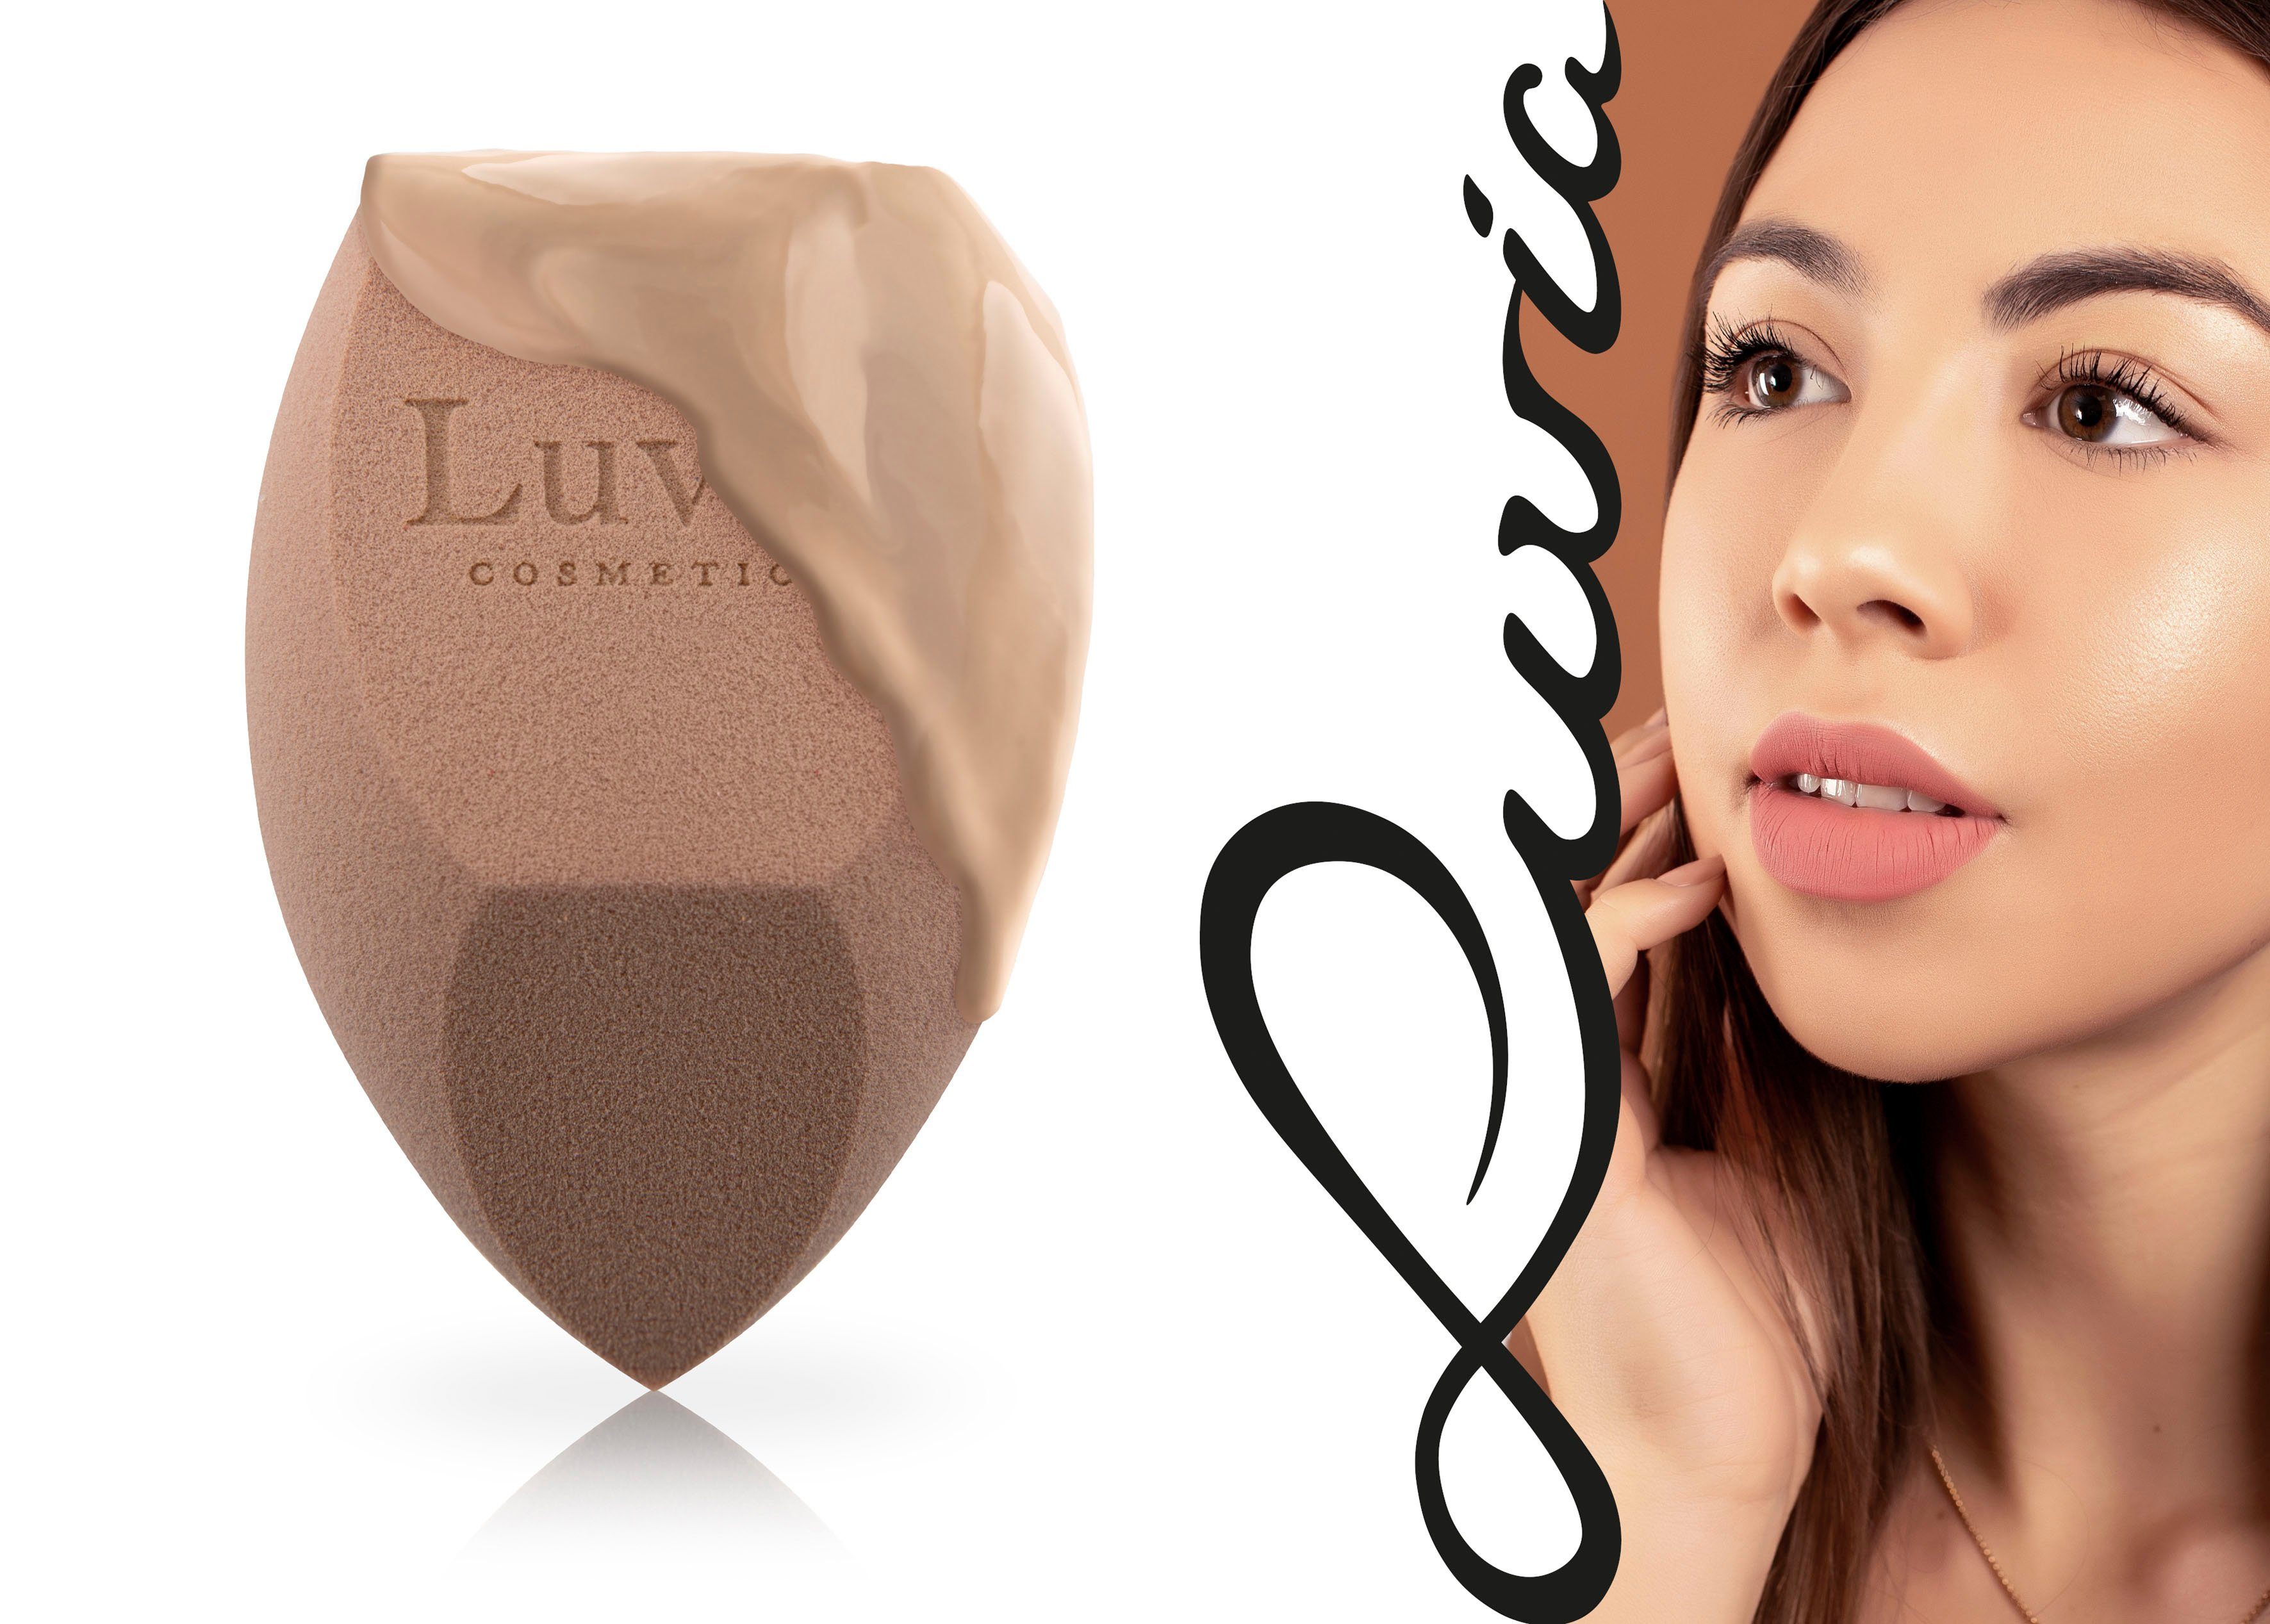 Luvia Cosmetics Schwamm Schwamm Vegan Make-up Body Prime Make-up Sponge, XXL